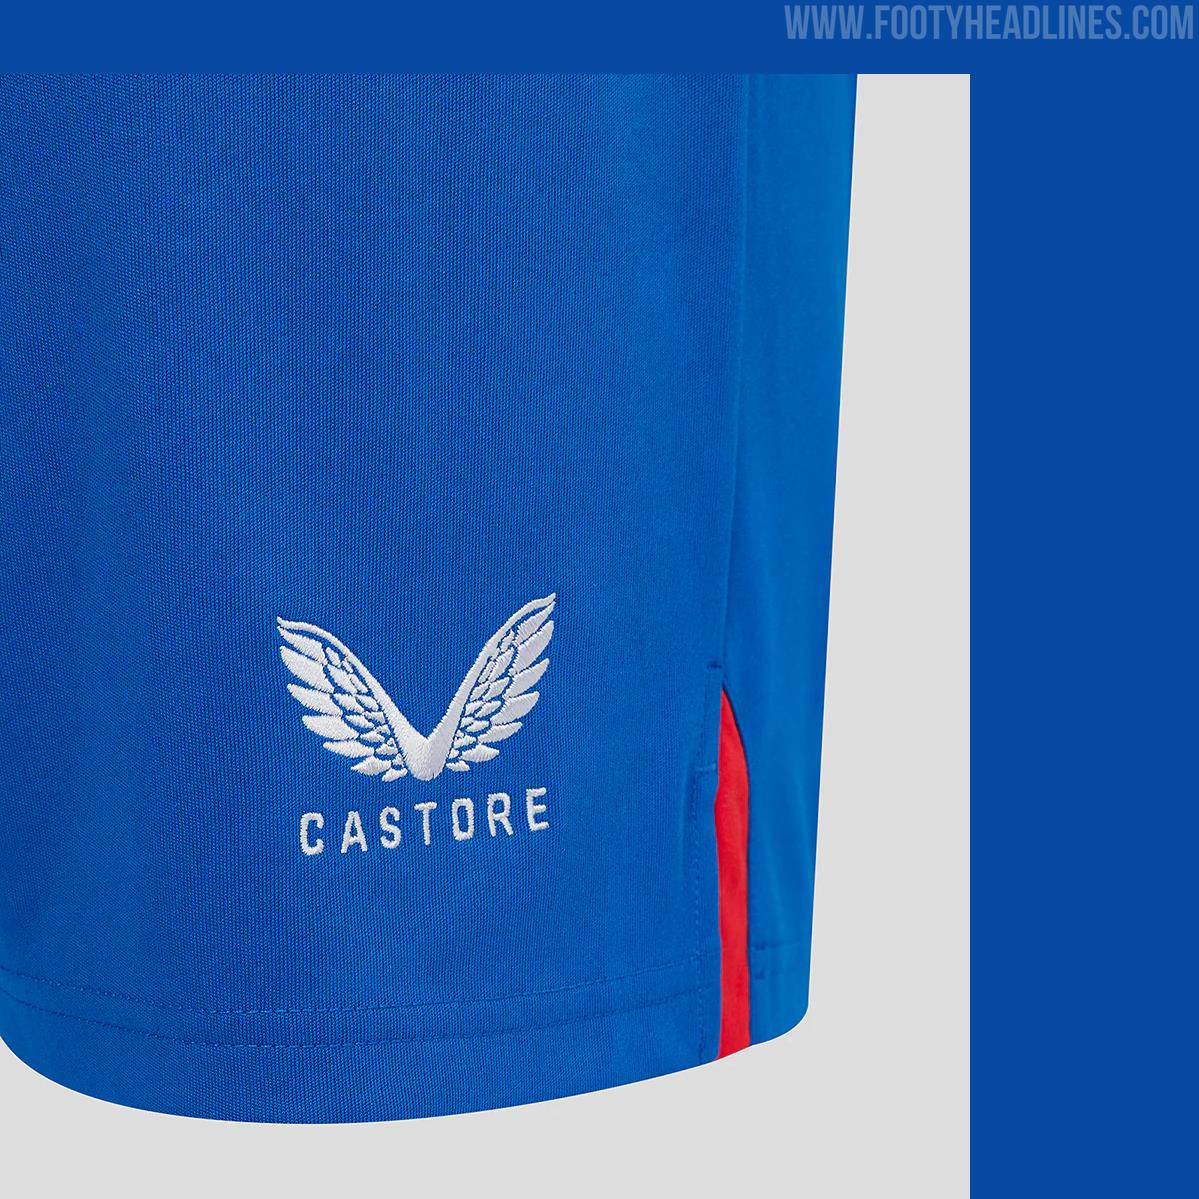 New Rangers Castore away kit 'leaked' online with defunct Sportemon Go  branding - Football Scotland